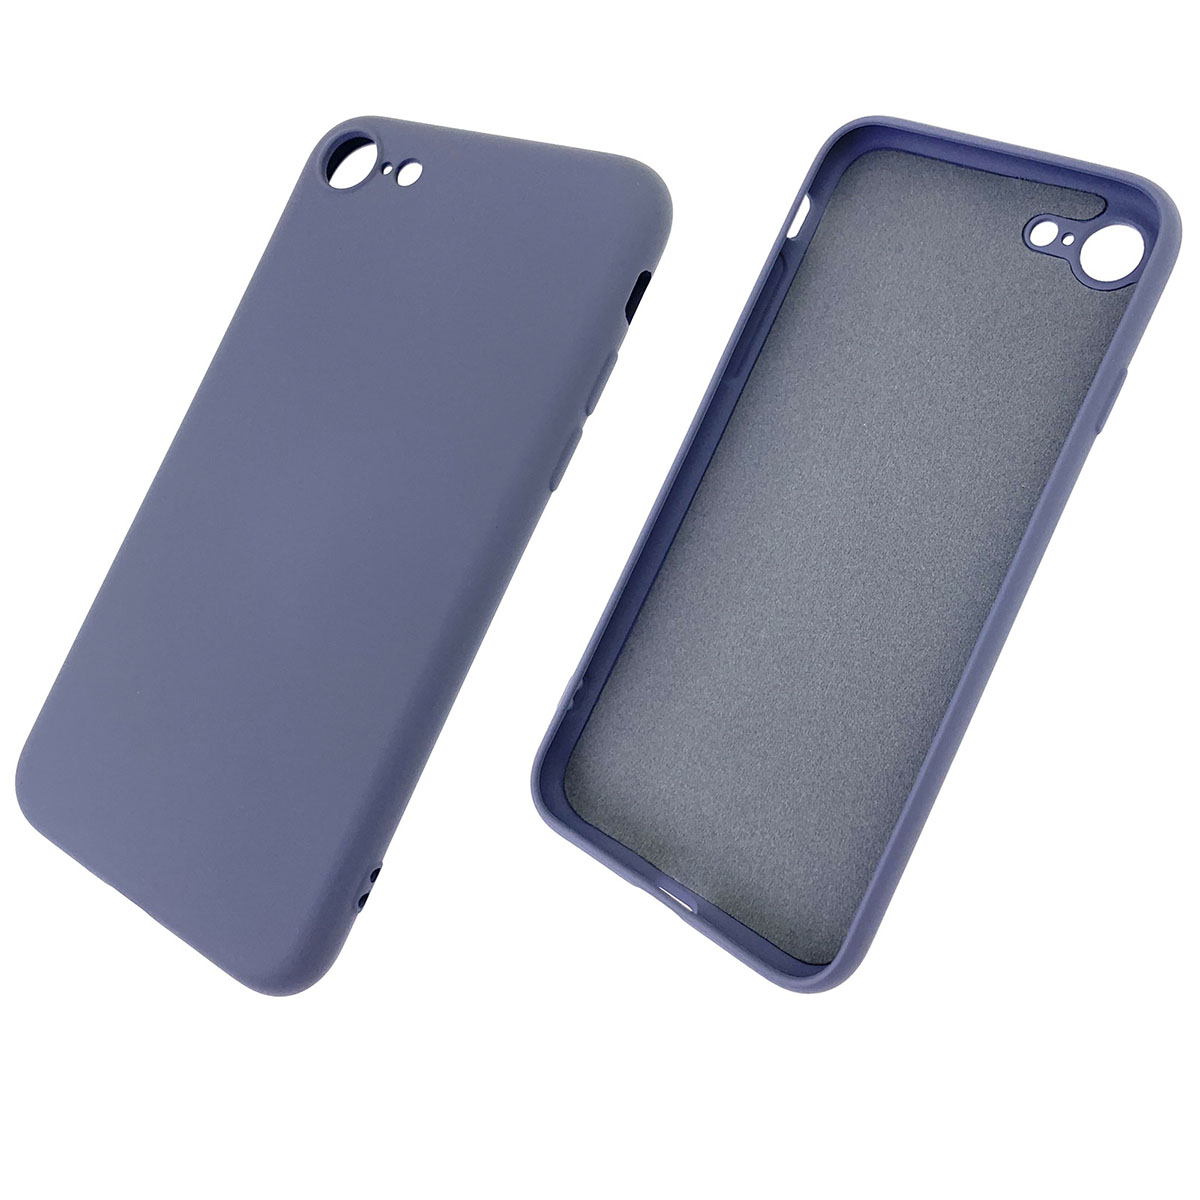 Чехол накладка для APPLE iPhone 7, 8, силикон, цвет сиреневый.